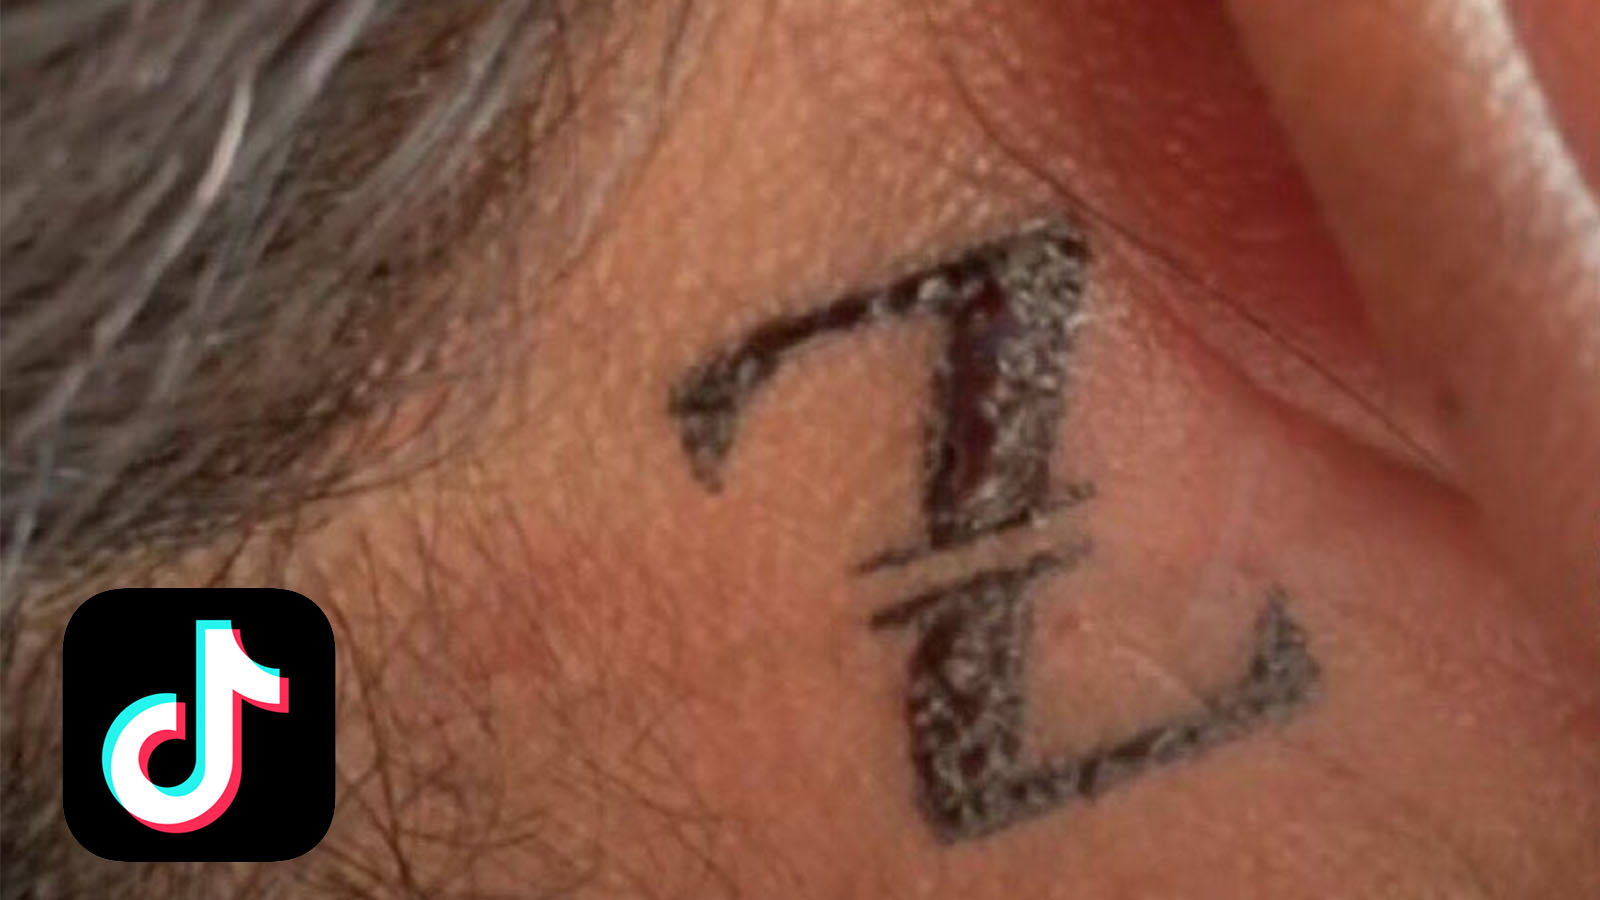 Internet outraged over offensive “Gen Z Tattoo” TikTok trend - Dexerto